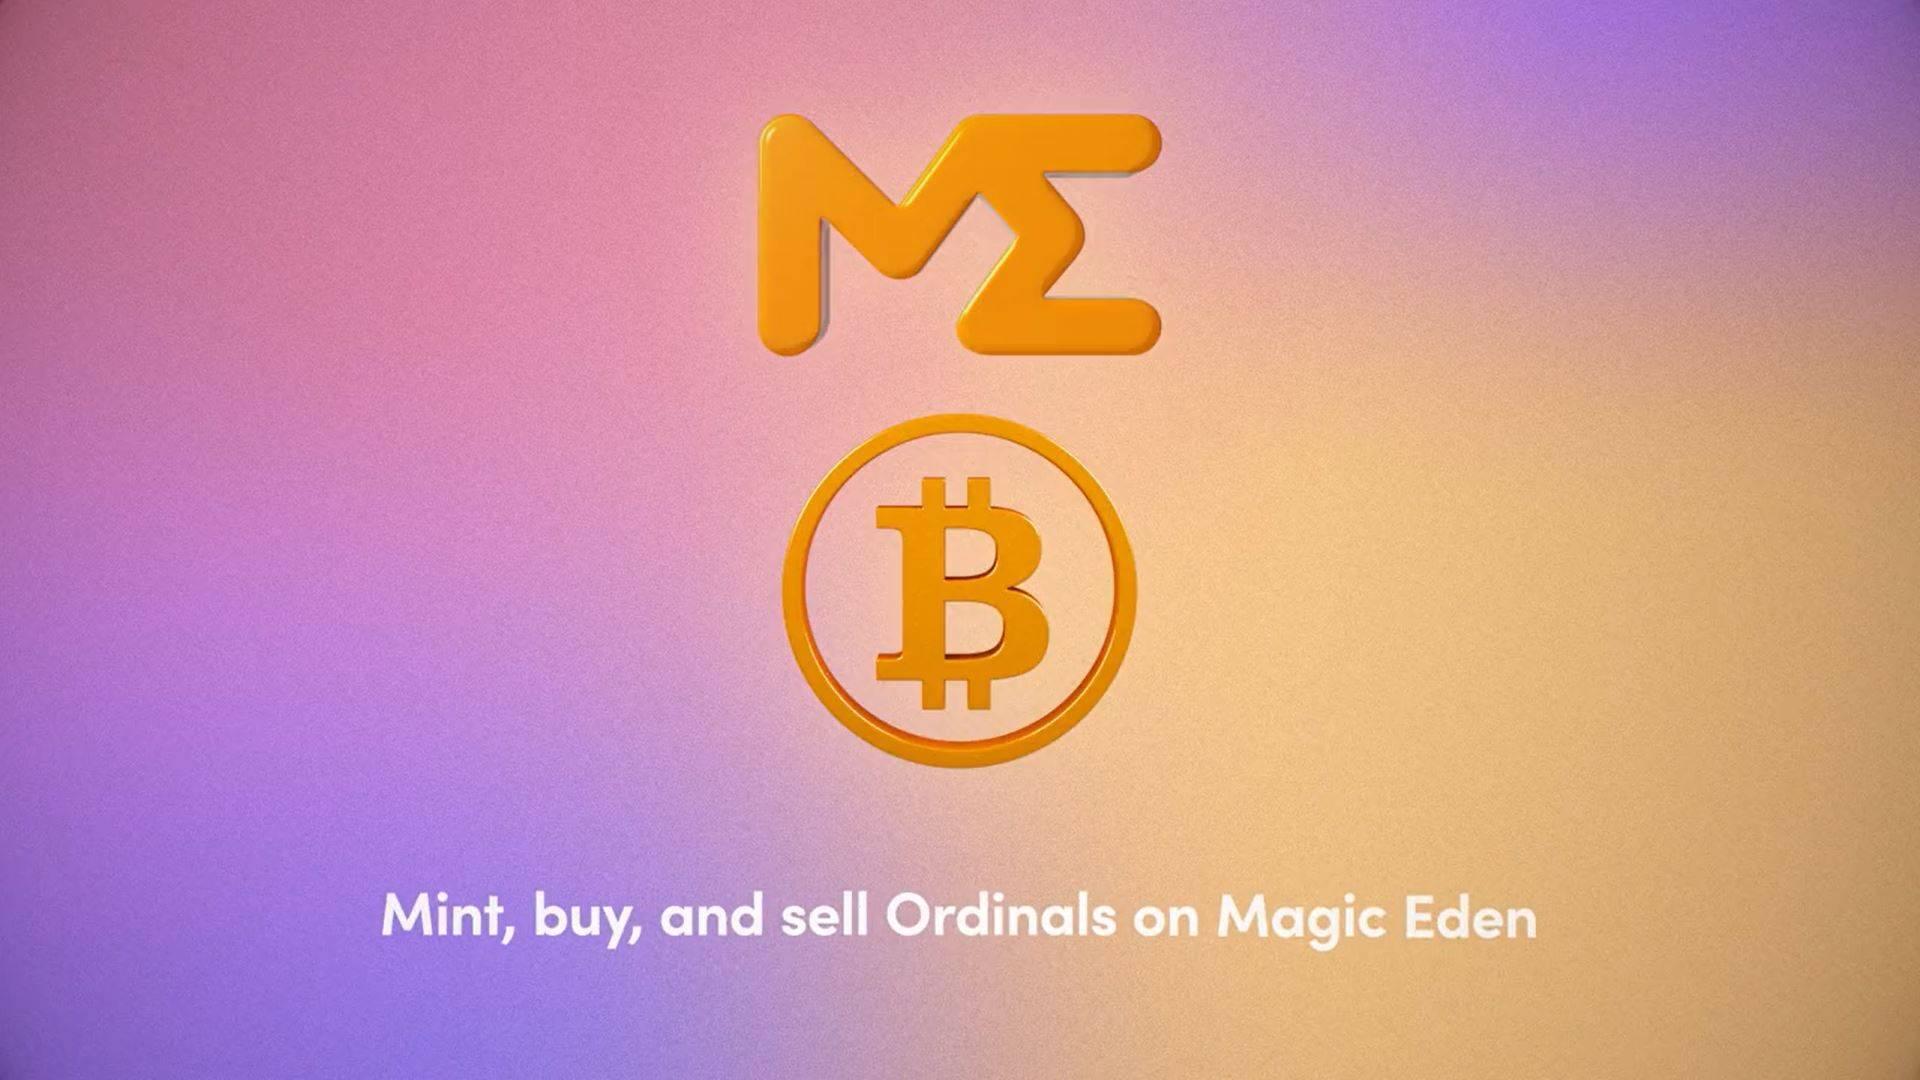 magic-eden-ra-mat-bitcoin-nft-launchpad-dau-tien